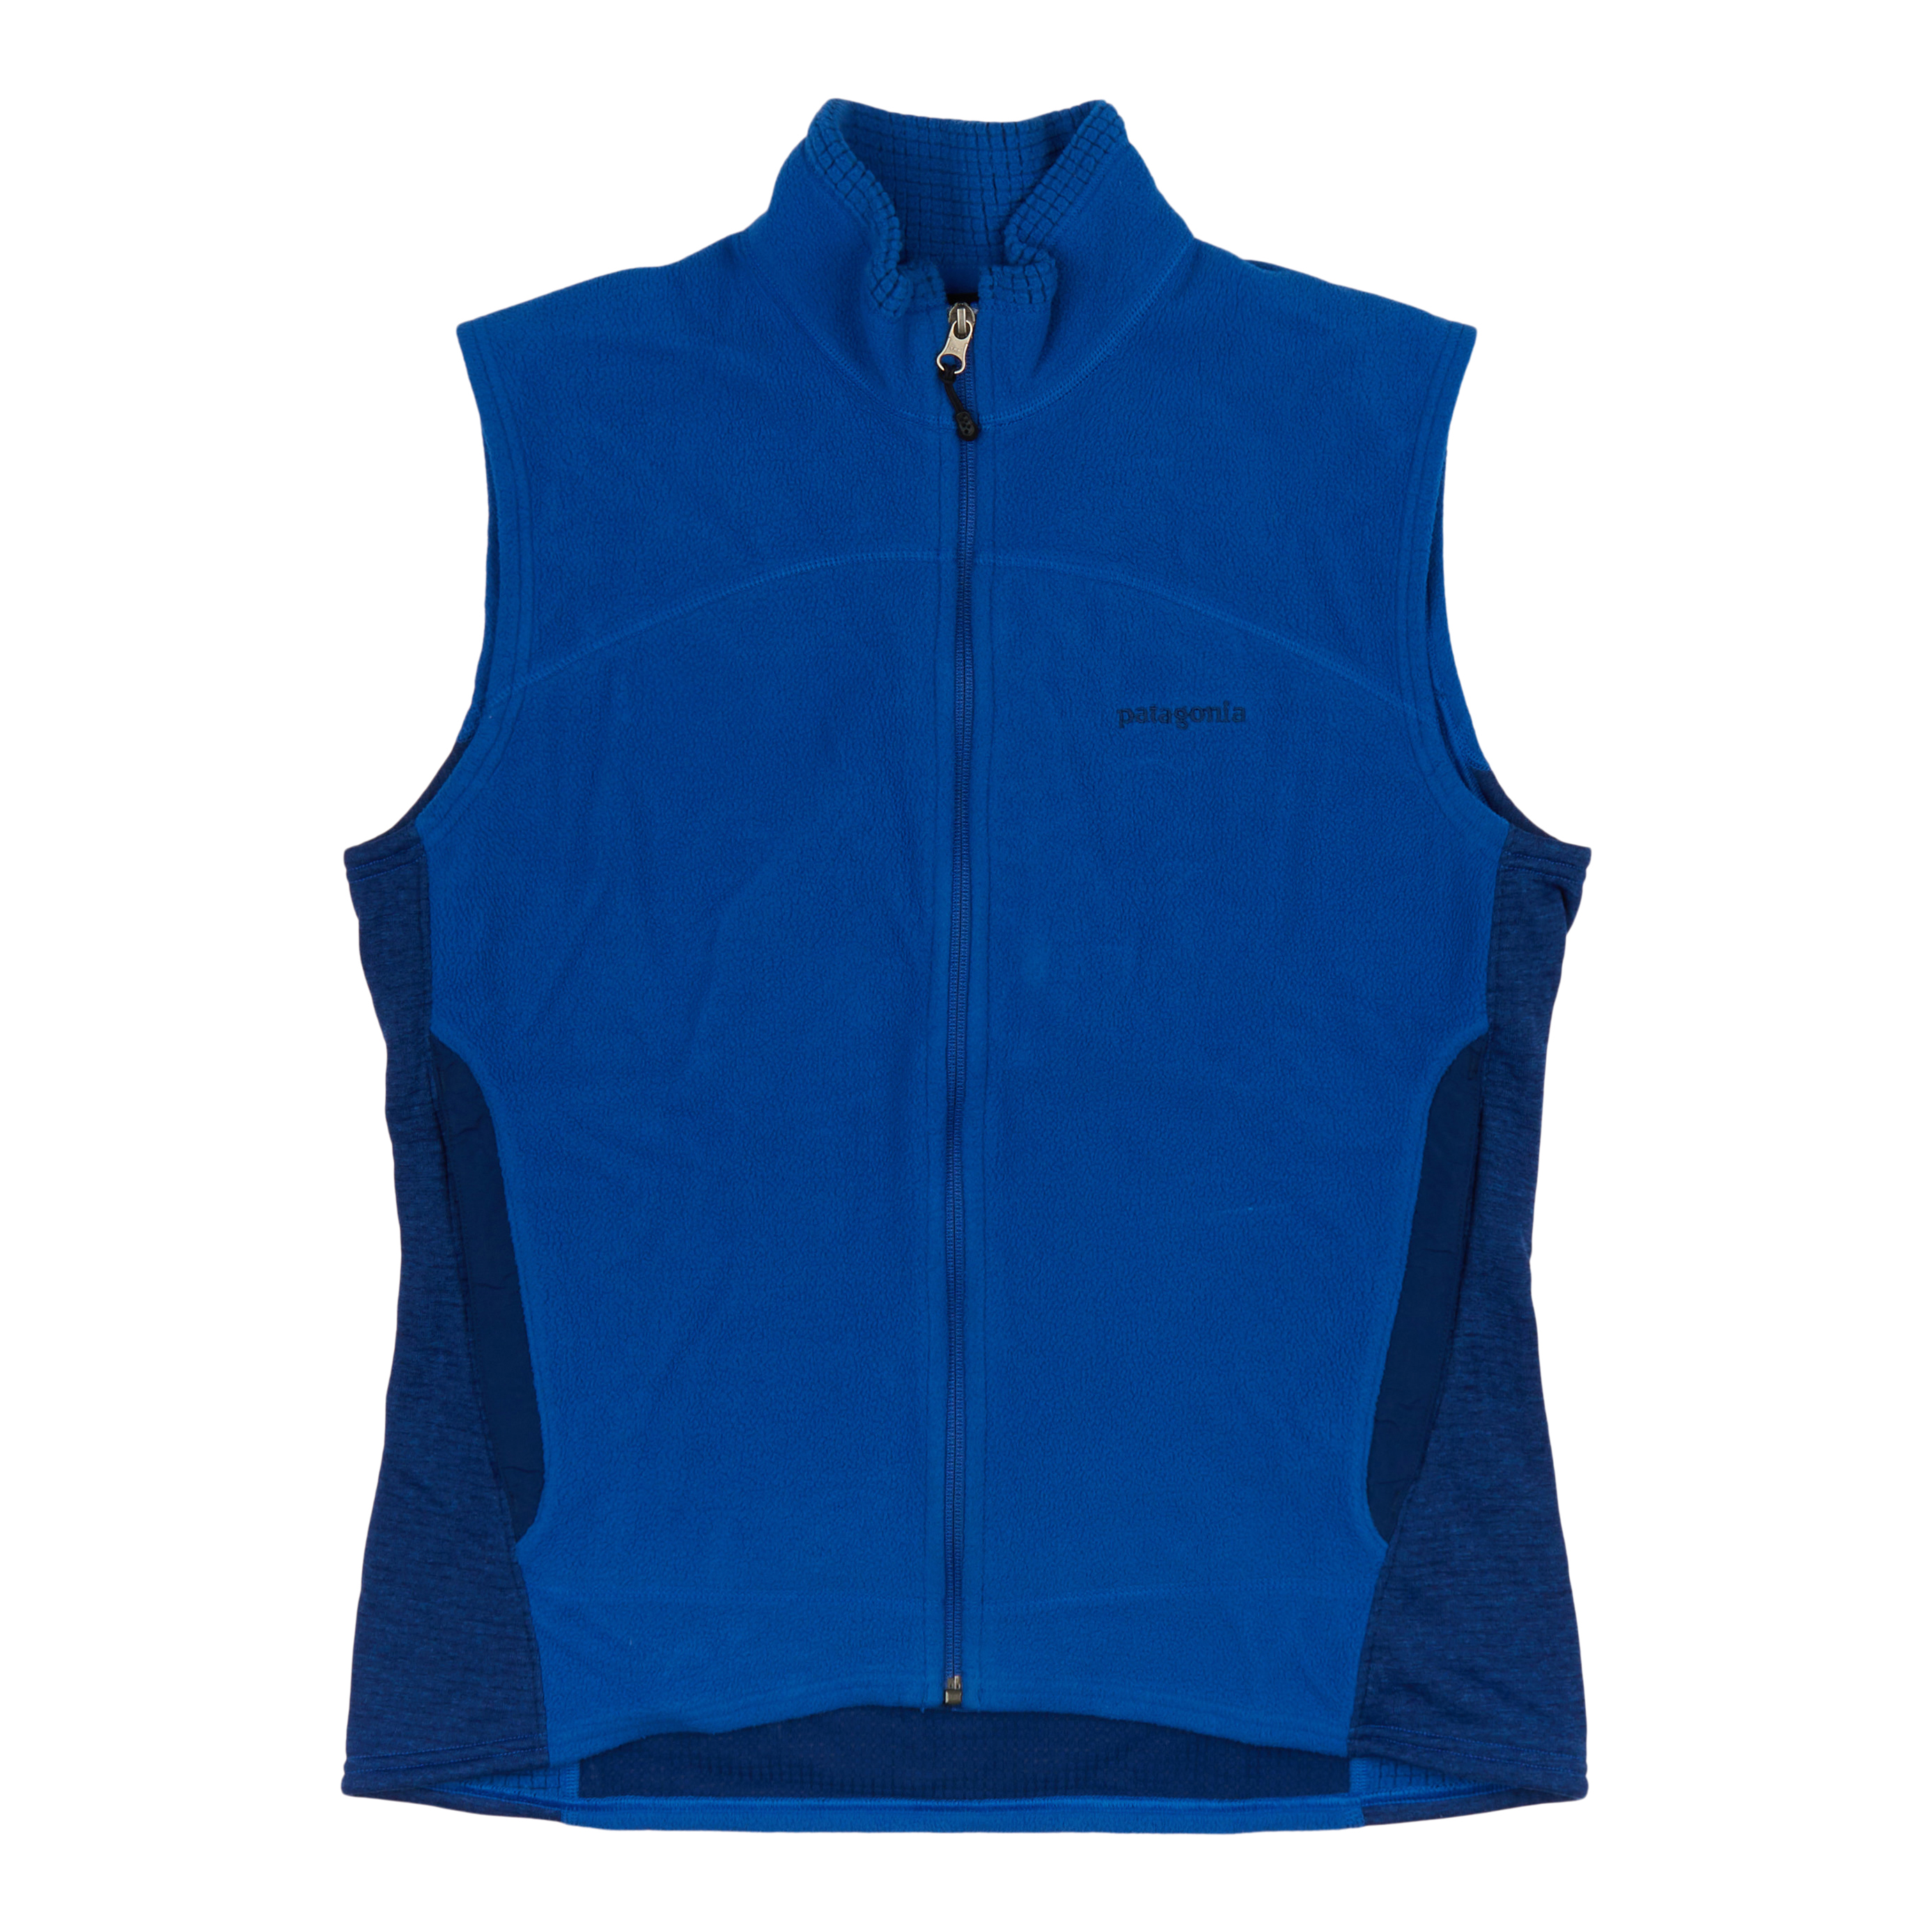 Patagonia Worn Wear Men's Lightweight R4 Vest Royal - Used